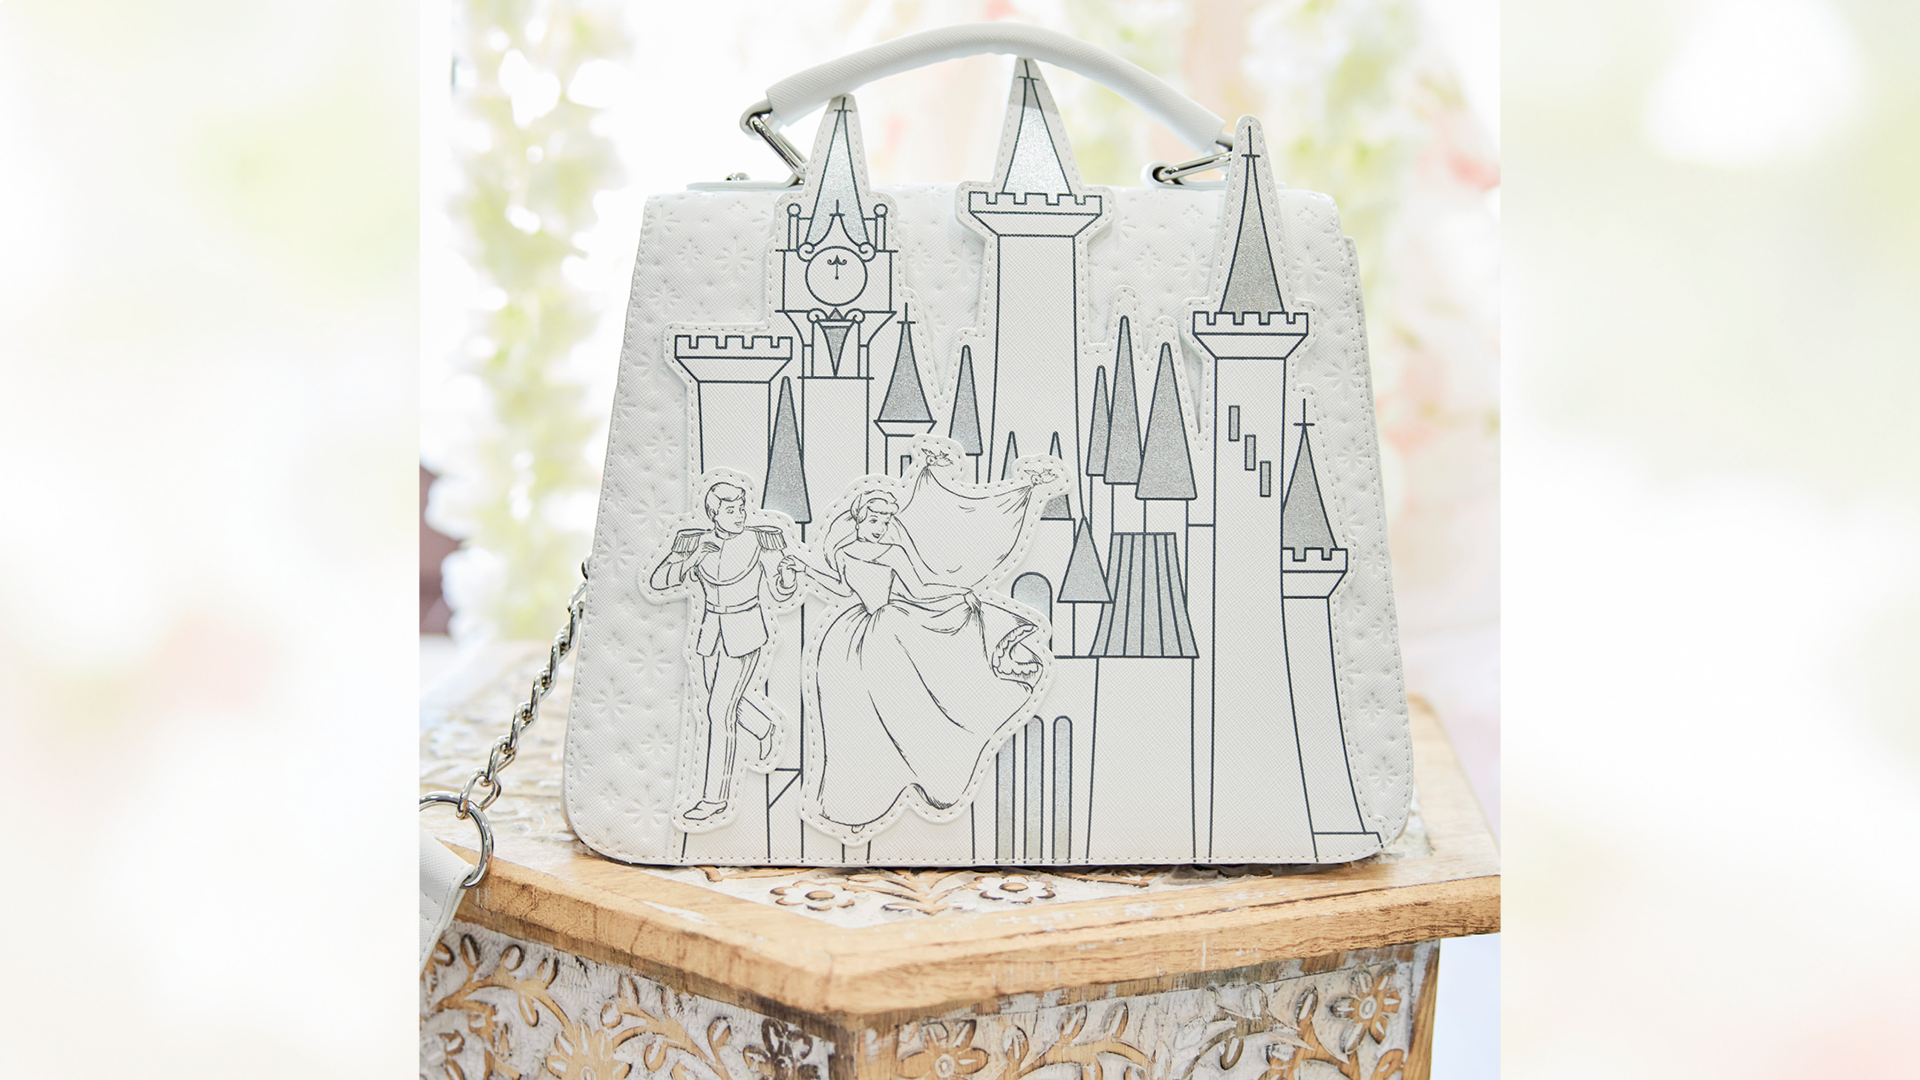 Danielle Nicole Disney Sleeping Beauty Castle Backpack